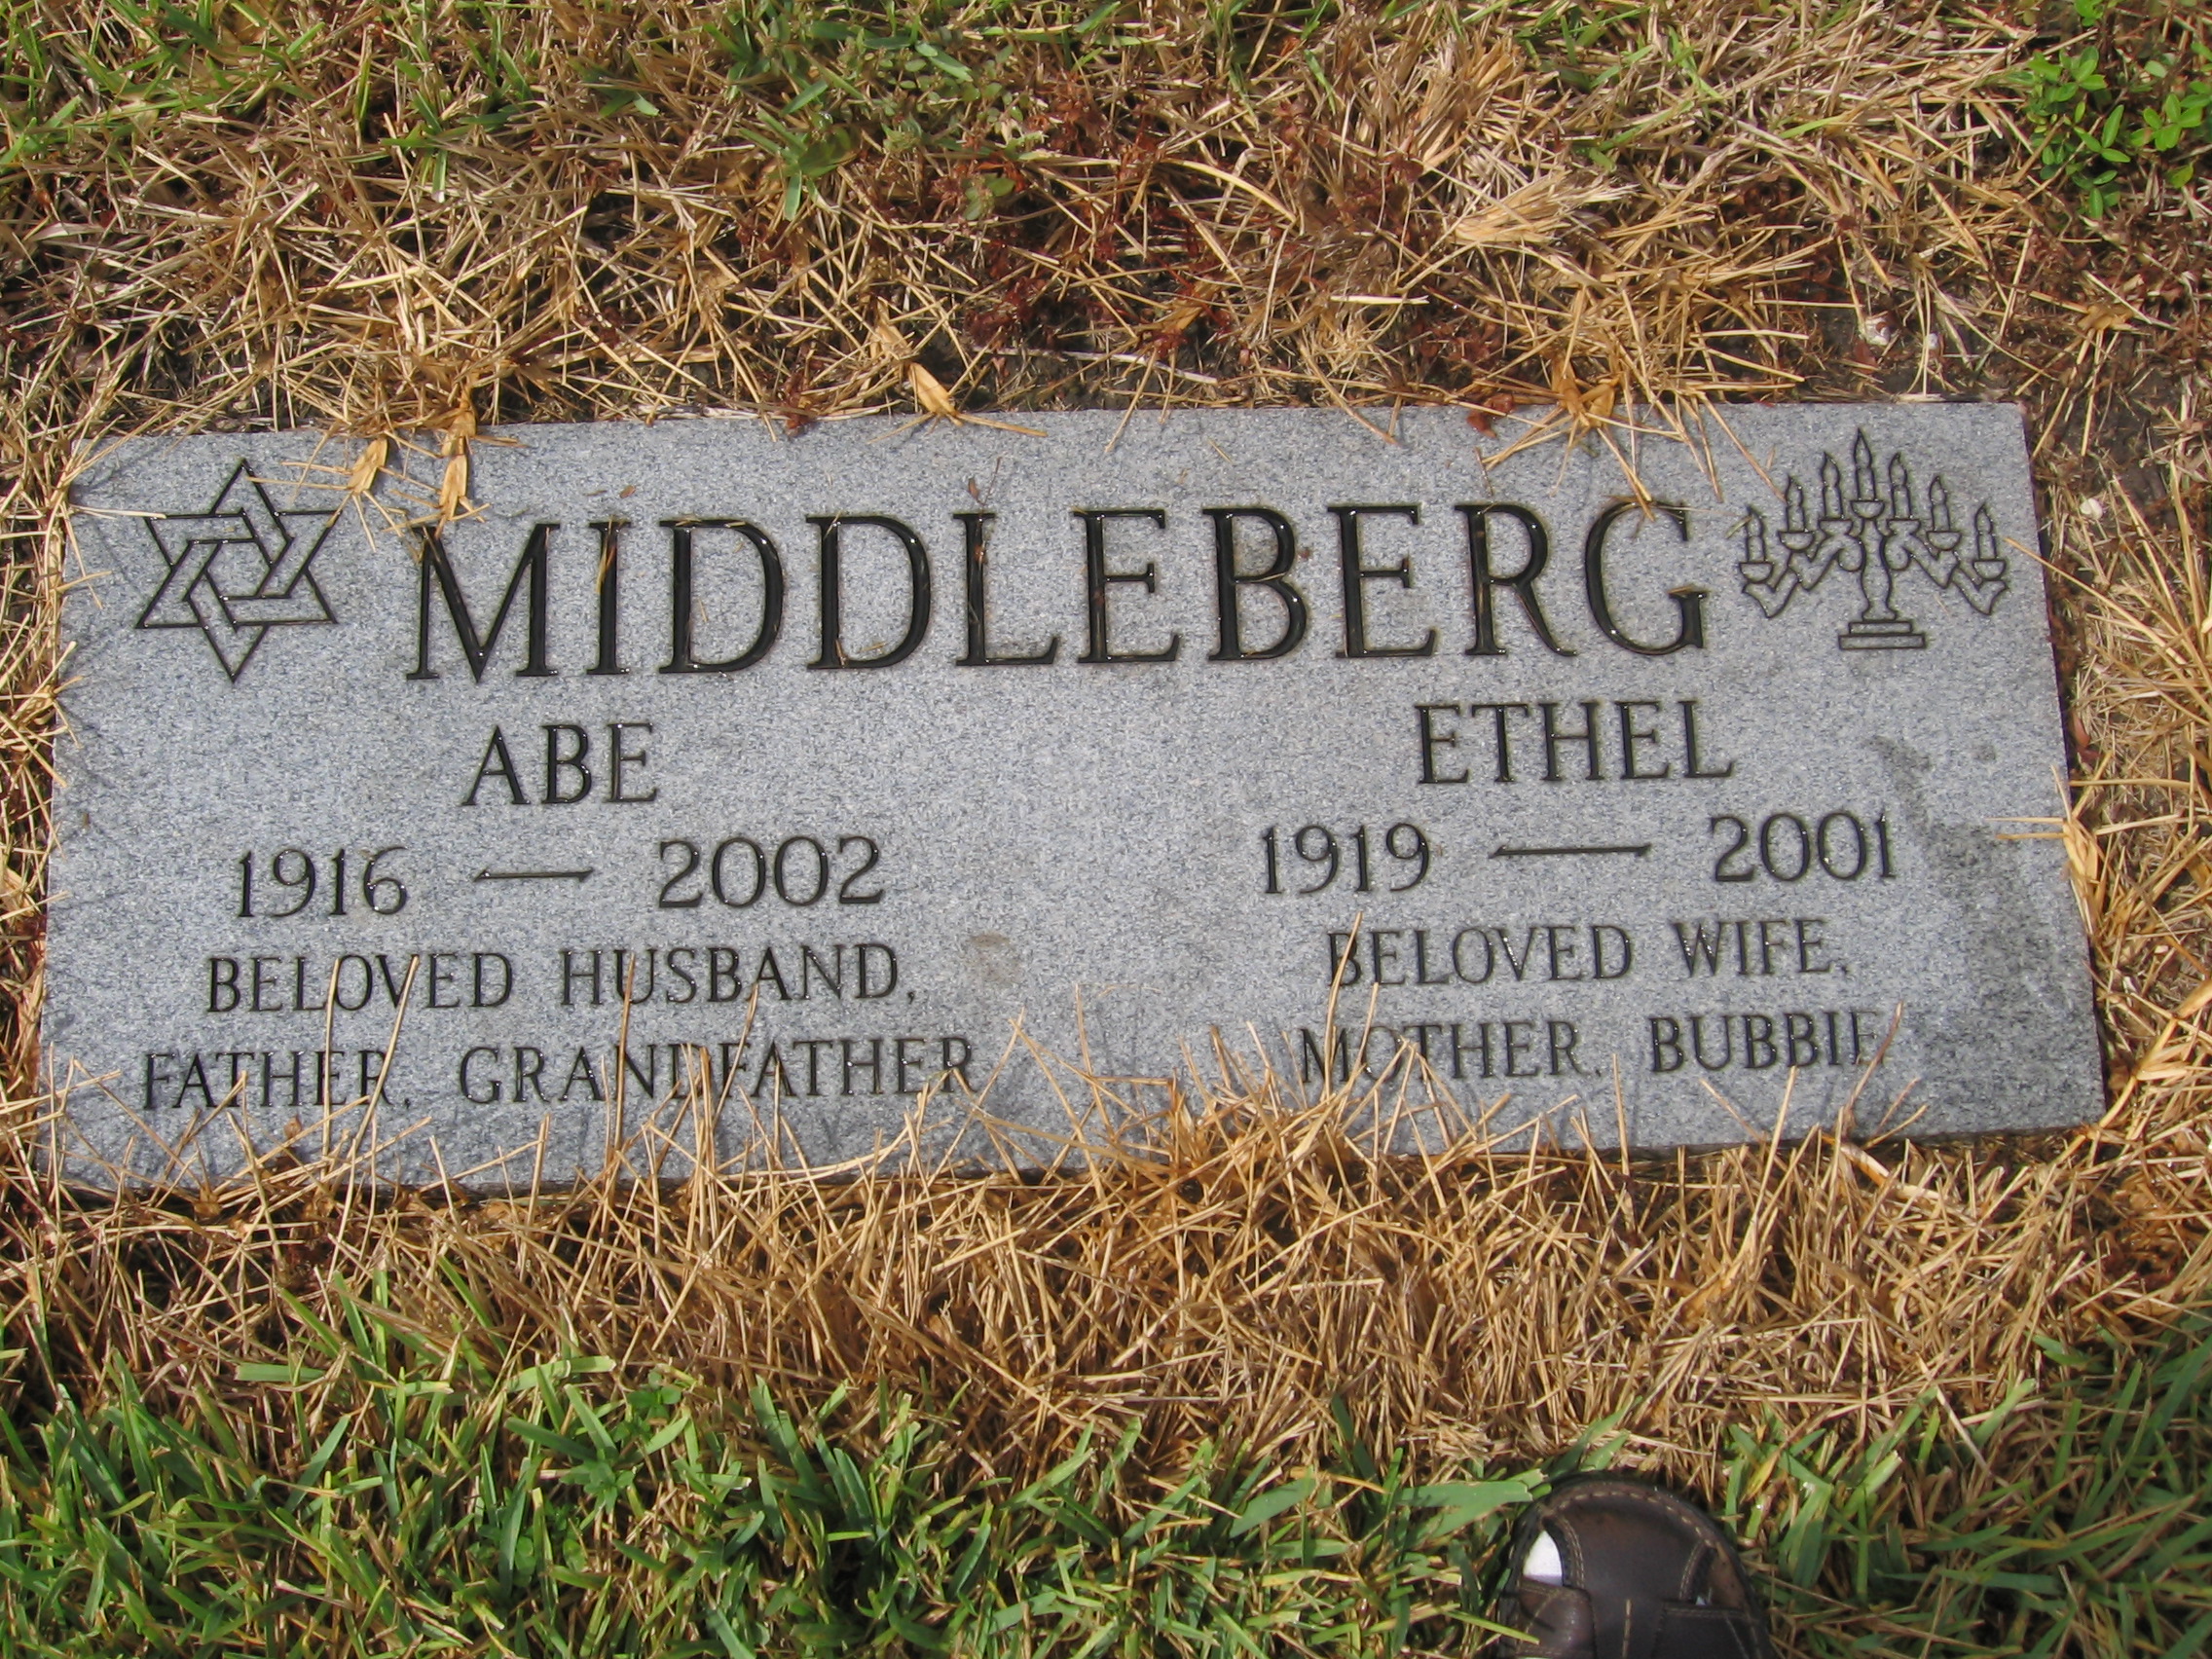 Ethel Middleberg